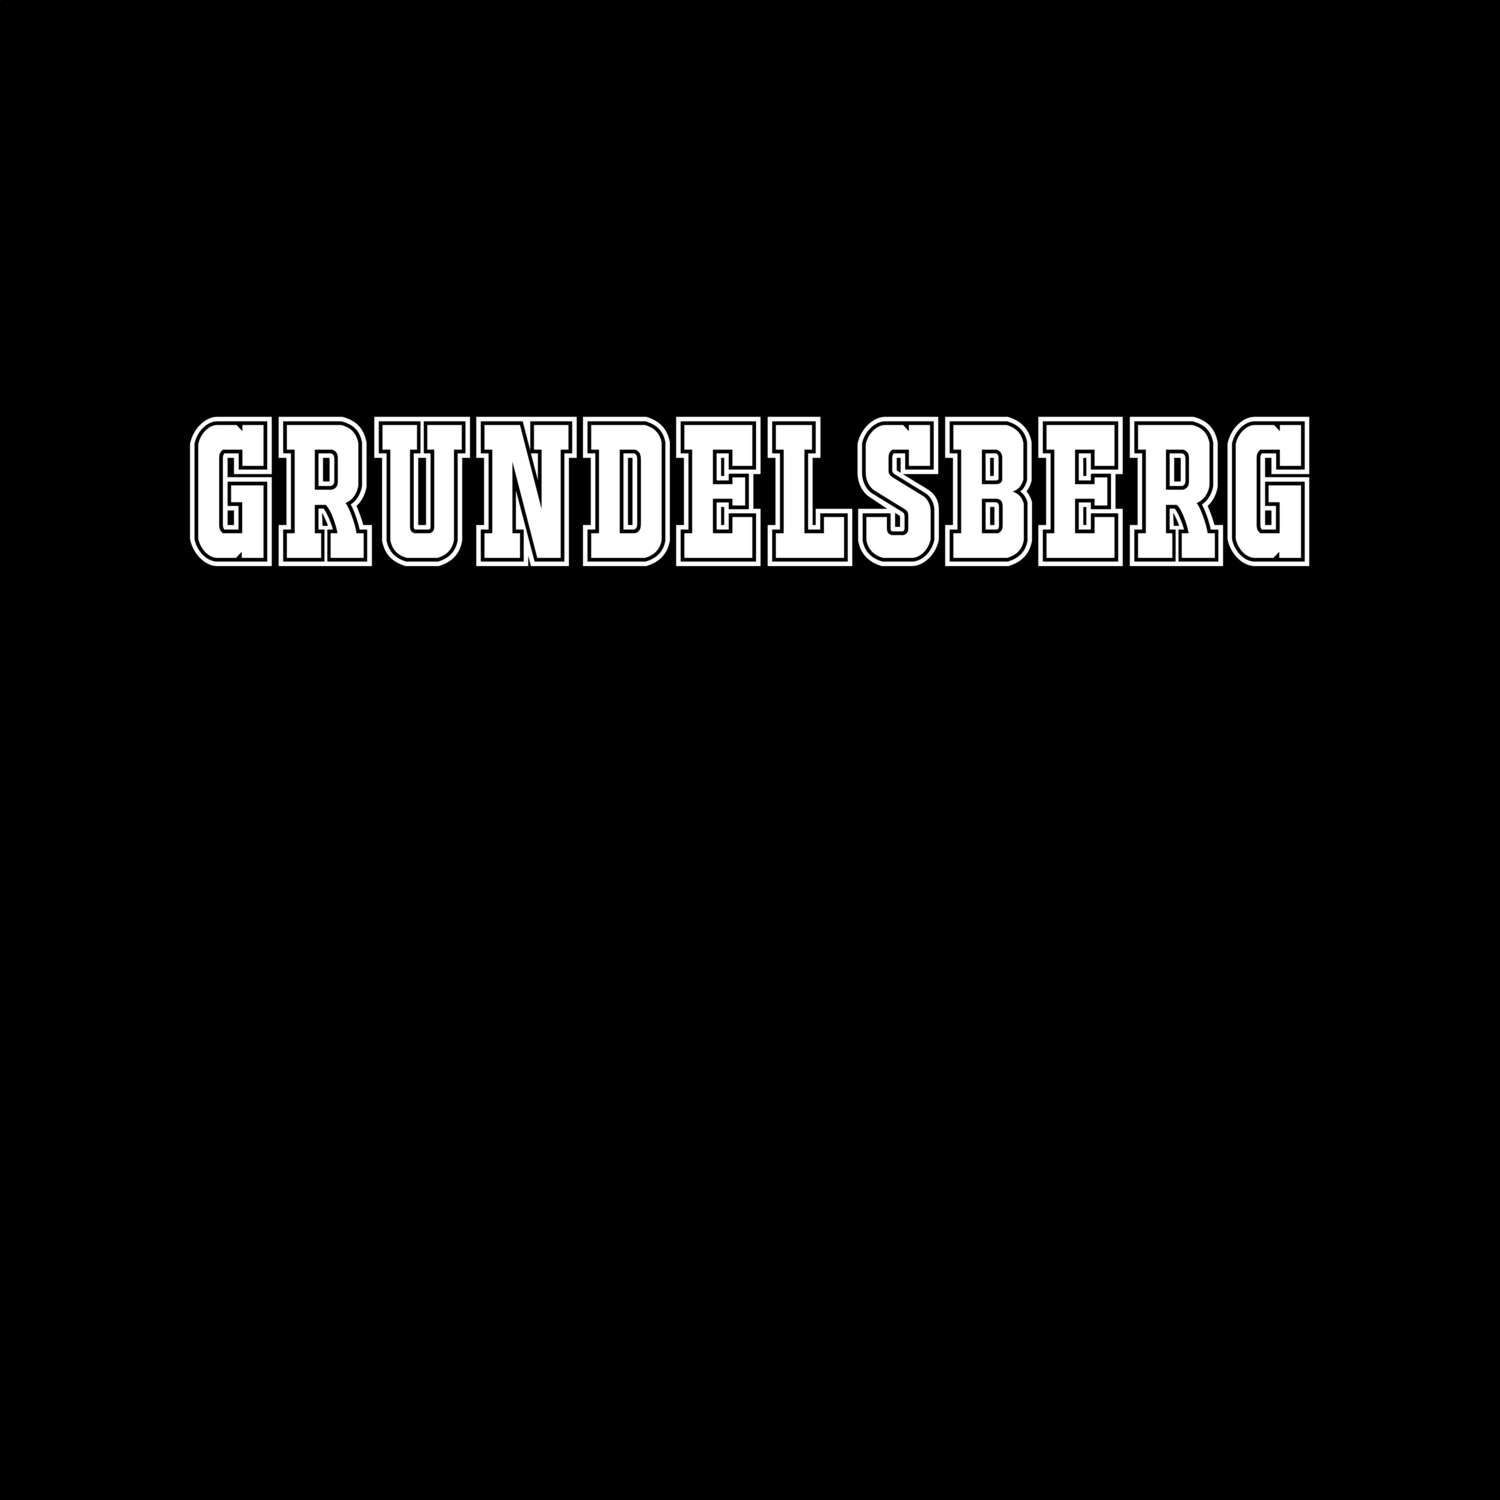 Grundelsberg T-Shirt »Classic«